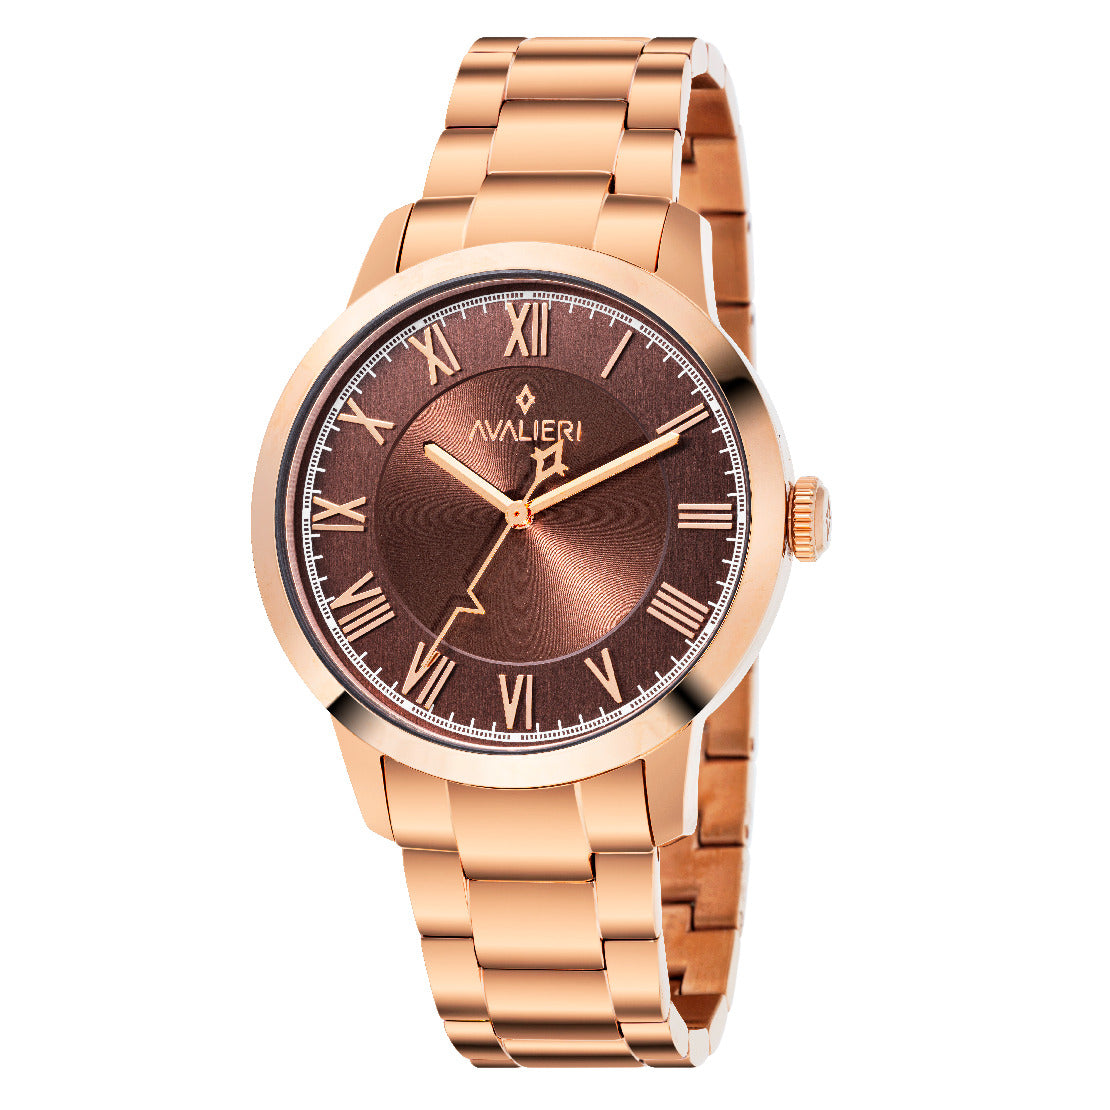 Avalieri Men's Quartz Watch, Brown Dial - AV-2550B